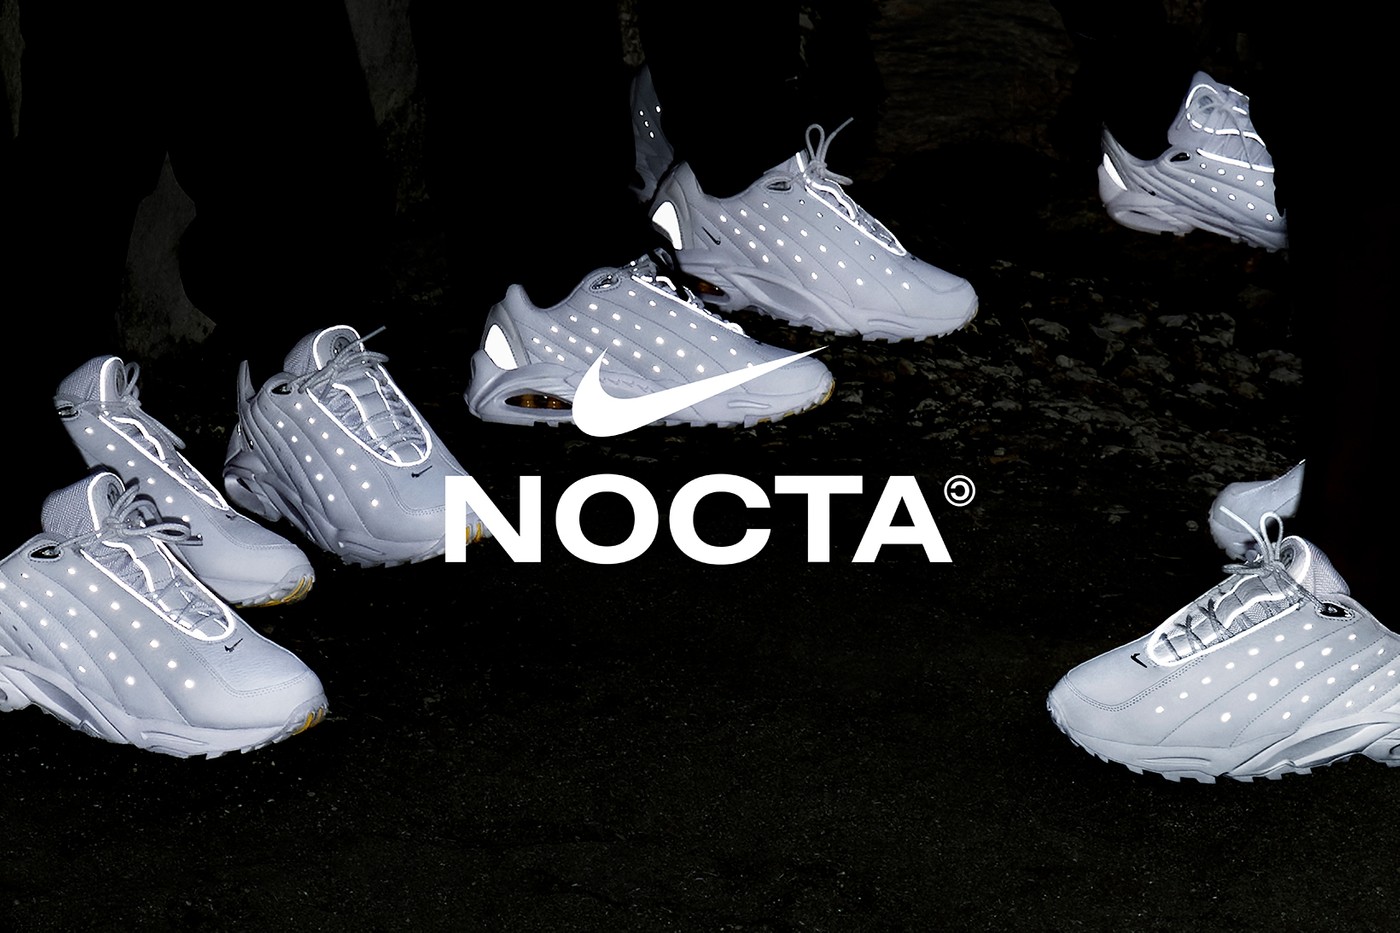 Drake NOCTA Nike Hot Step Air Terra White Black Balenciaga HardCrocs YEEZY BOOST 350 V2 Dazzling Blue Release Date Price Where to buy